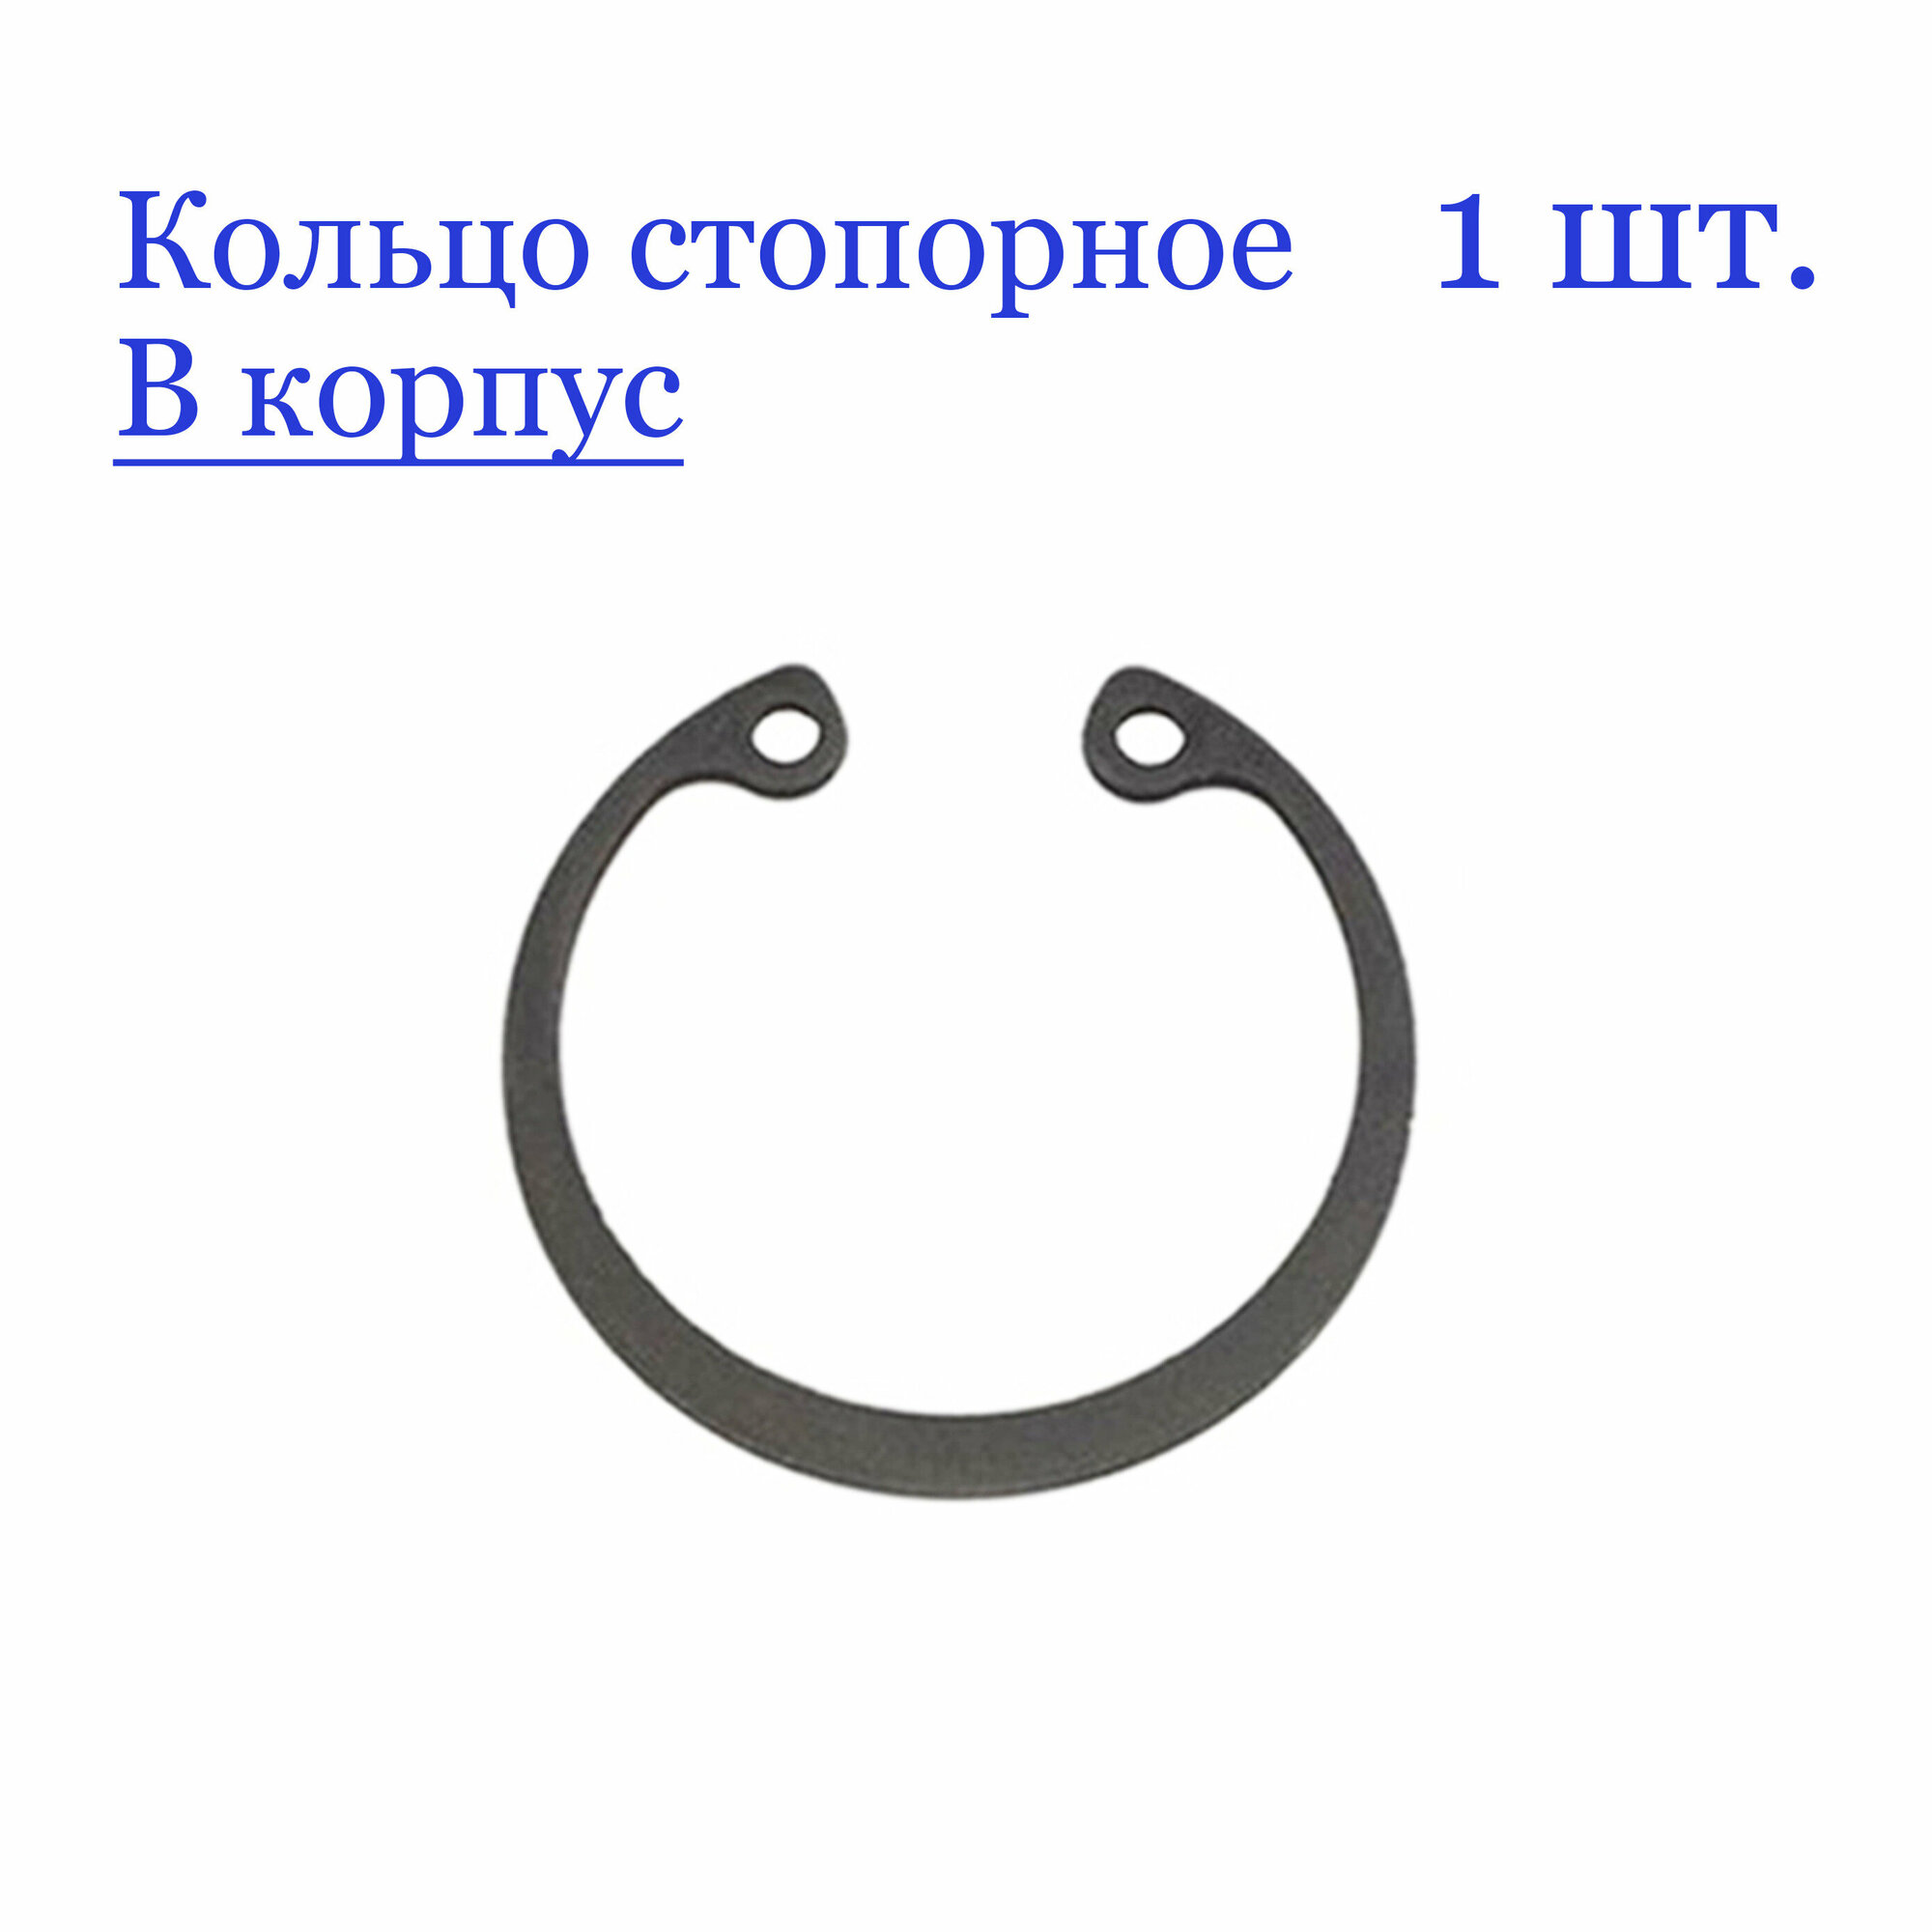 Кольцо стопорное, внутреннее, в корпус 70 мм. х 2,5 мм, ГОСТ 13943-86 (1 шт.)